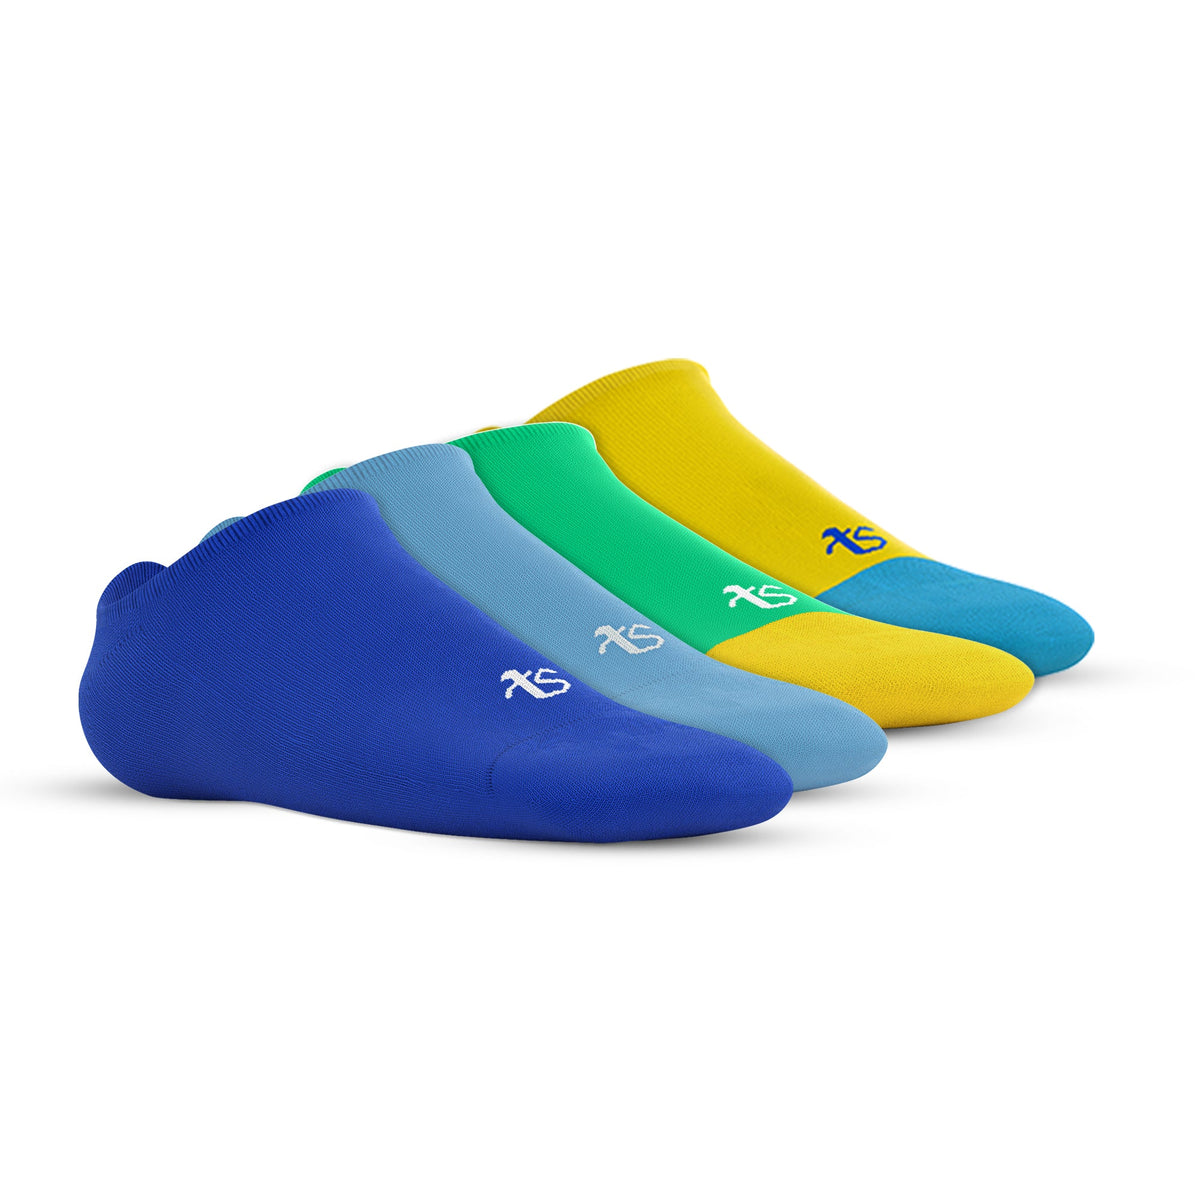 Loafer – See me – Green, Yellow, Peeka Blue – Royal Blue, Sky Blue – Set of 4